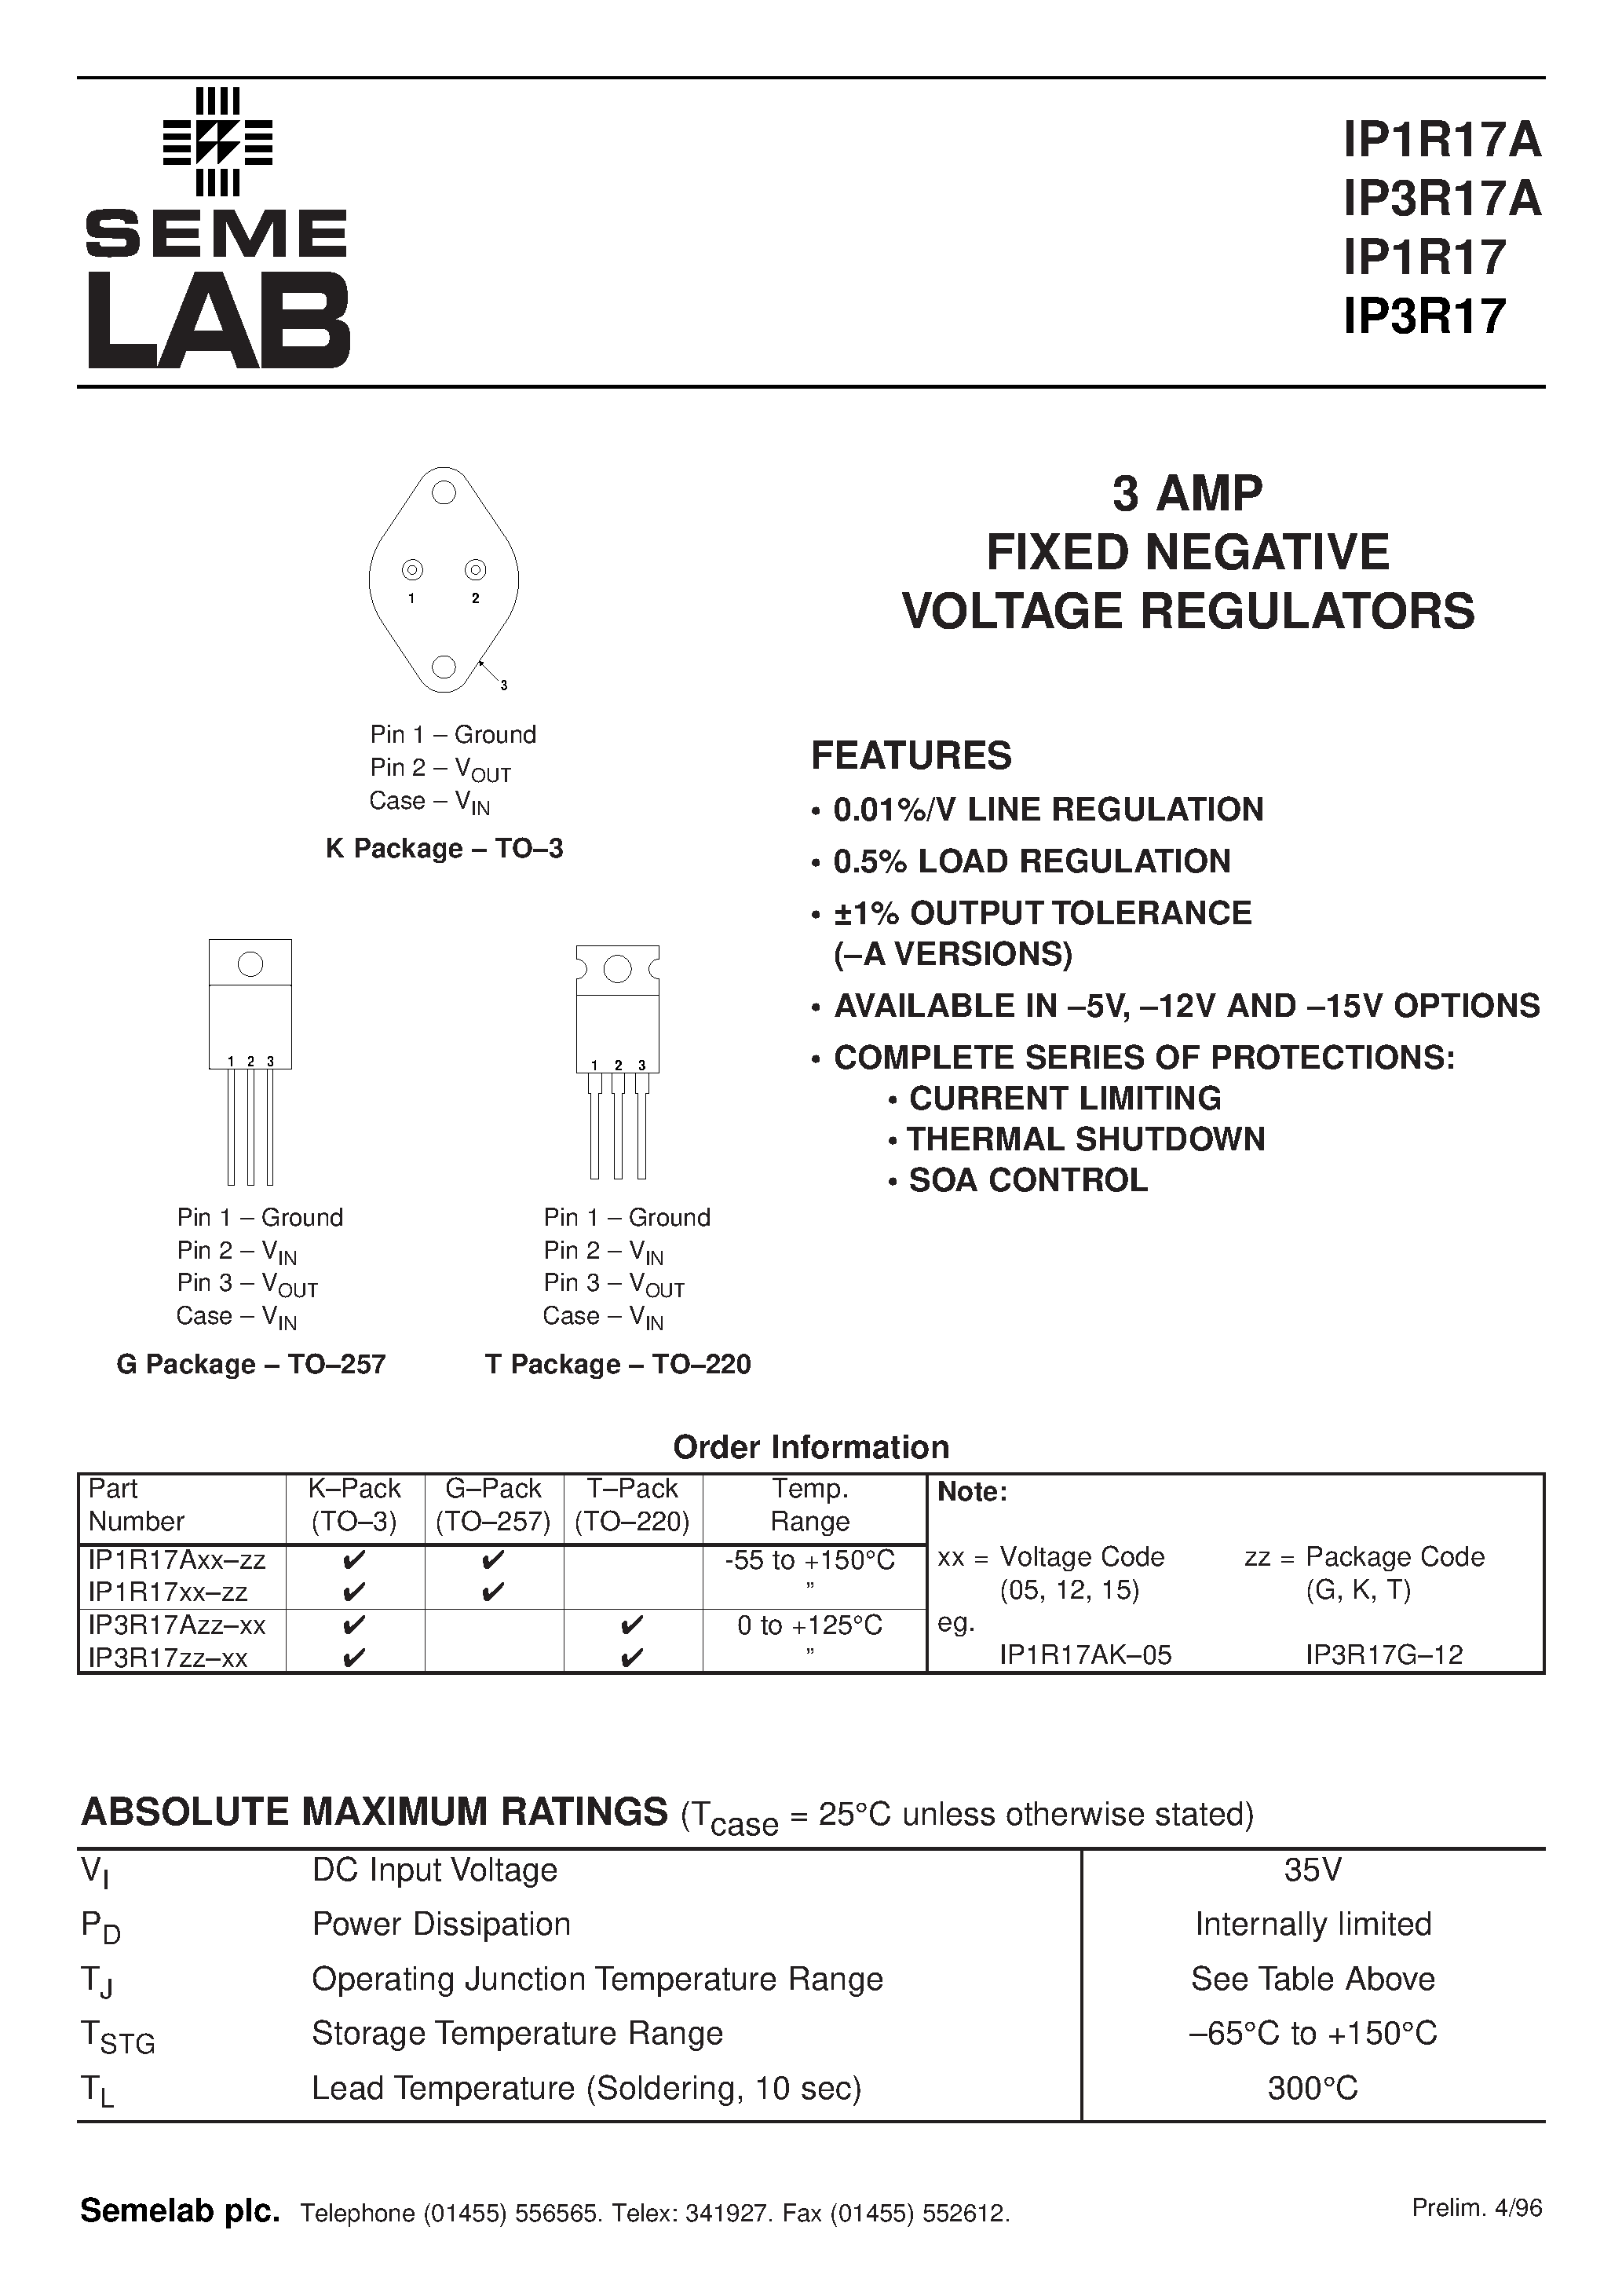 Datasheet IP1R17A05-K - 3 AMP FIXED NEGATIVE VOLTAGE REGULATORS page 1